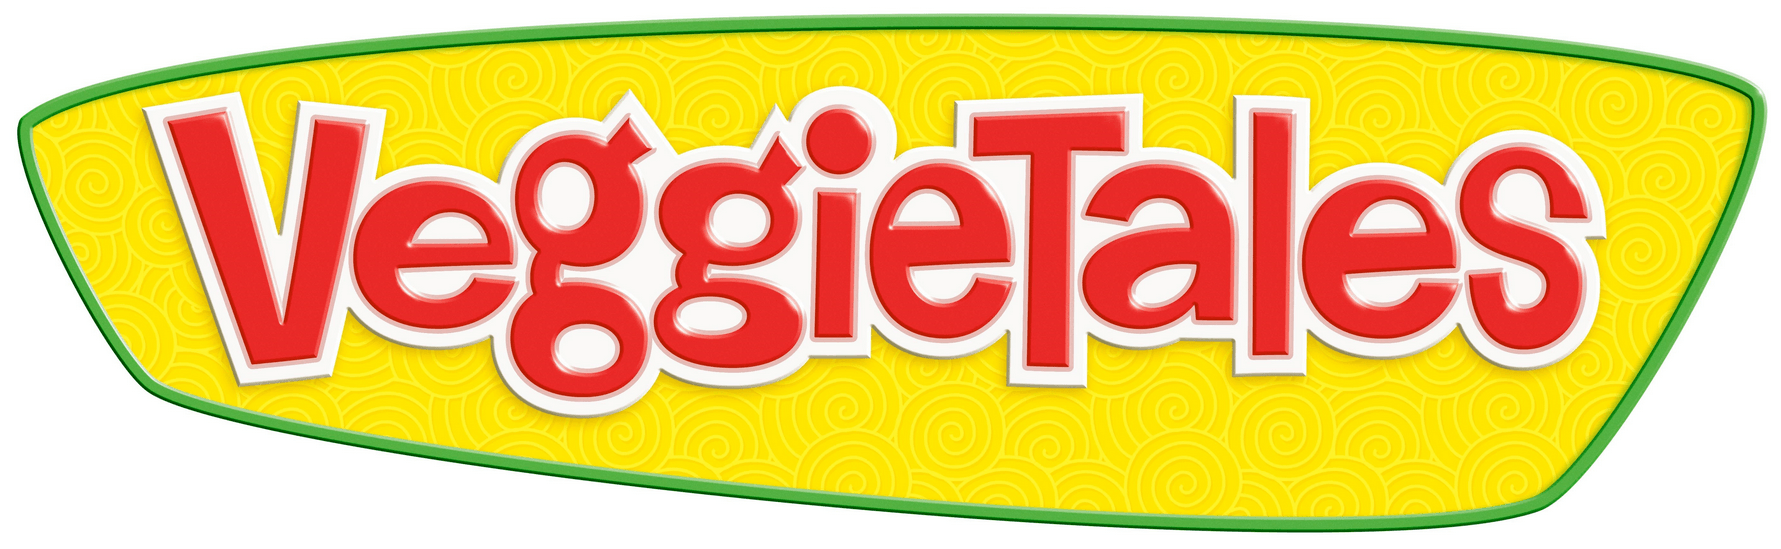 VeggieTales Logo - VeggieTales. Universal Animation Fan